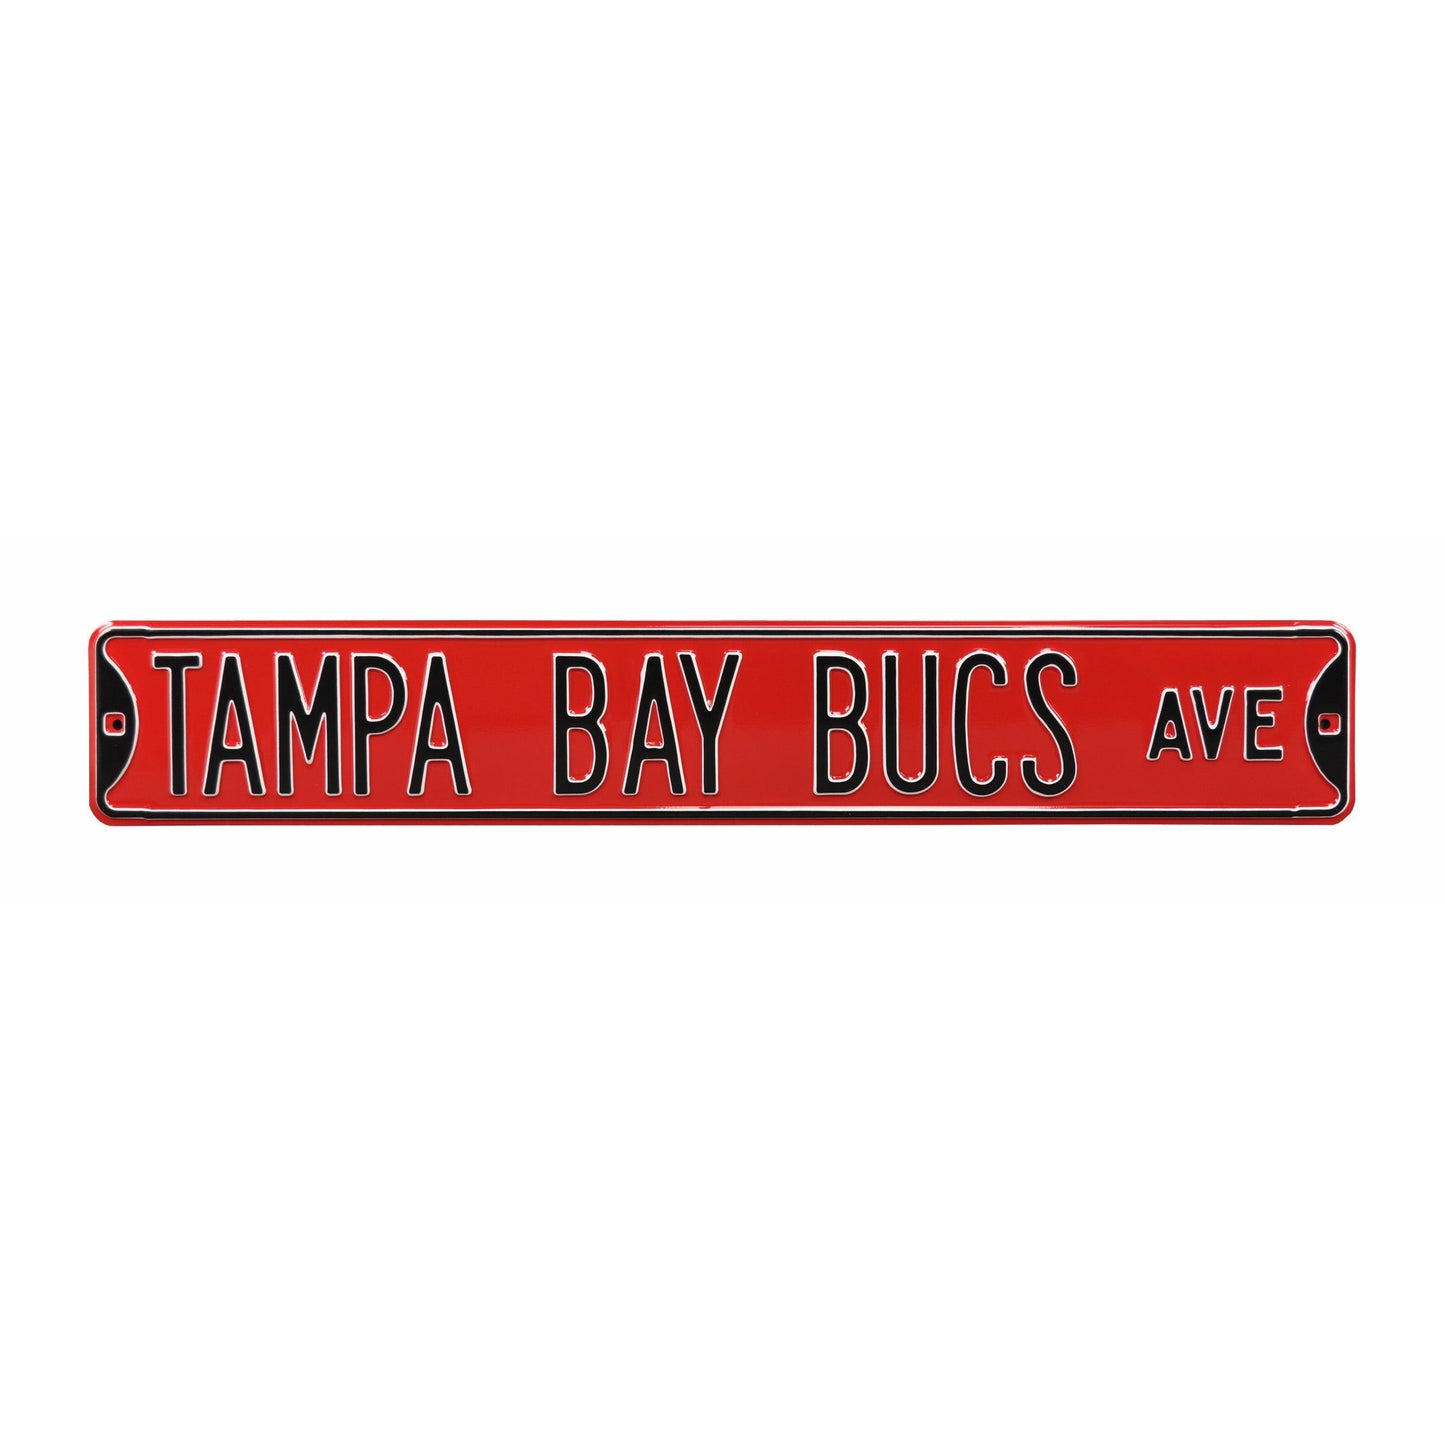 Tampa Bay Buccaneers - TAMPA BAY BUCS AVE - Embossed Steel Street Sign